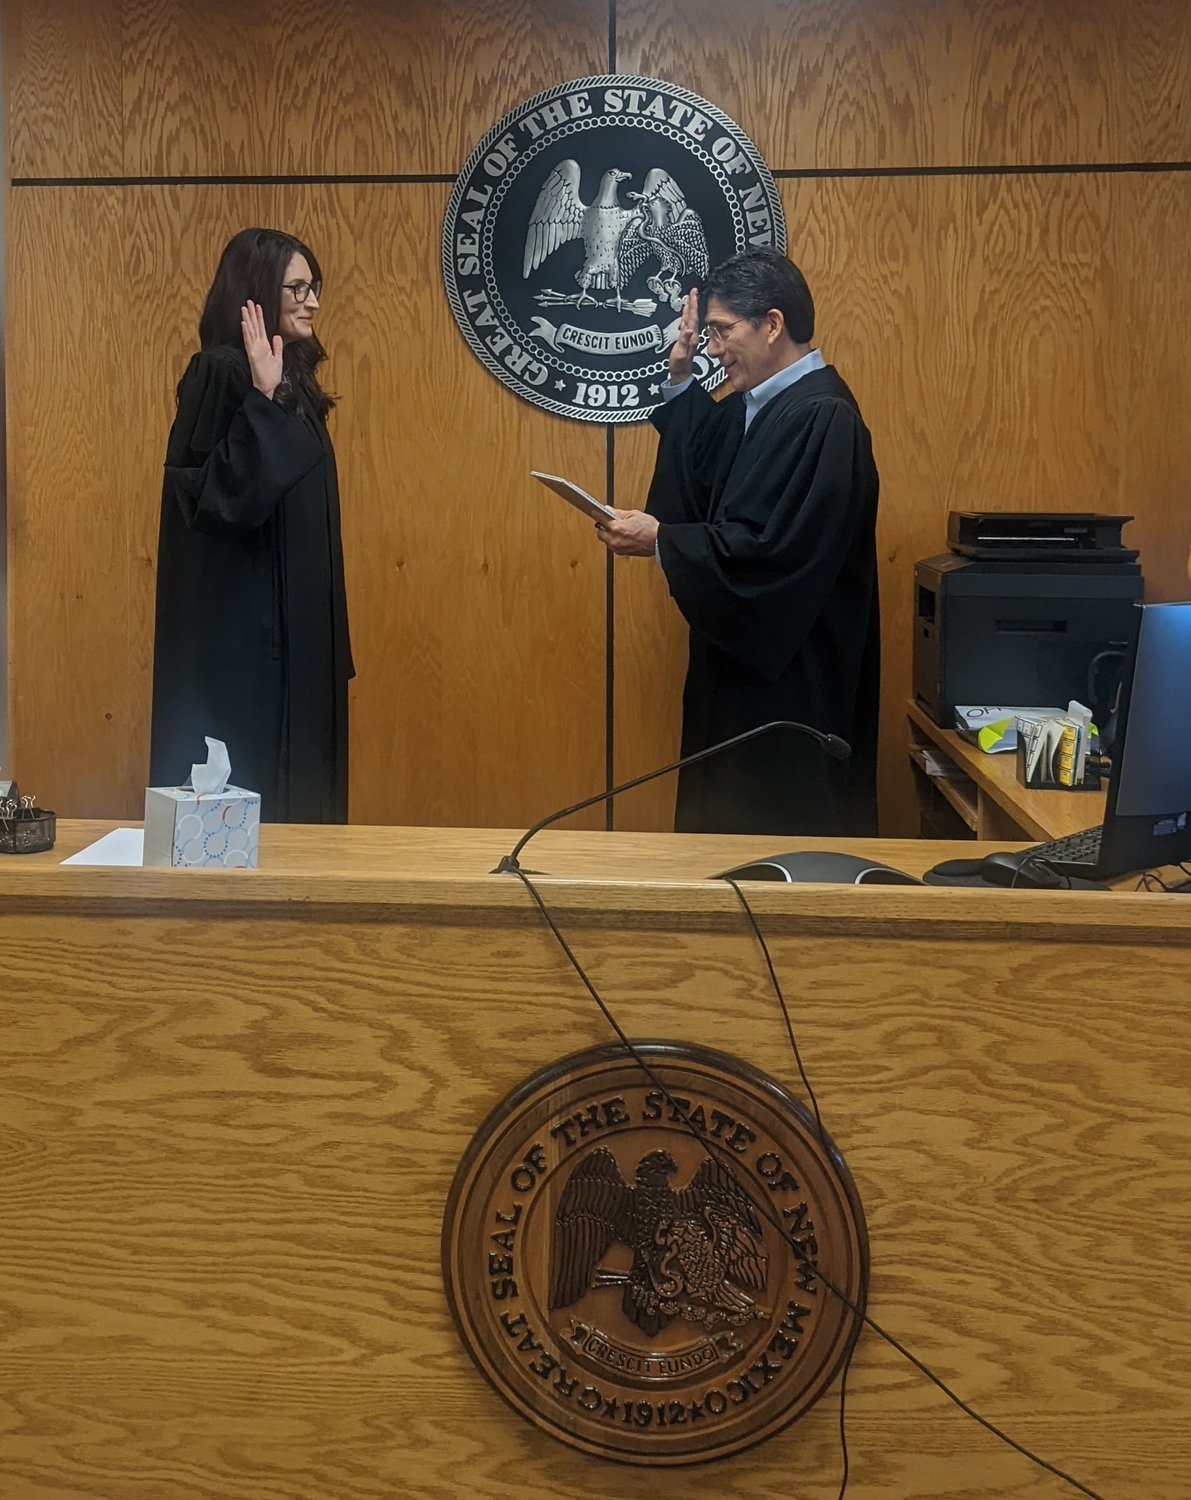 New District Judge Jessica Streeter was sworn in April 18 by Third Judicial District Chief Judge Manuel Arrieta.